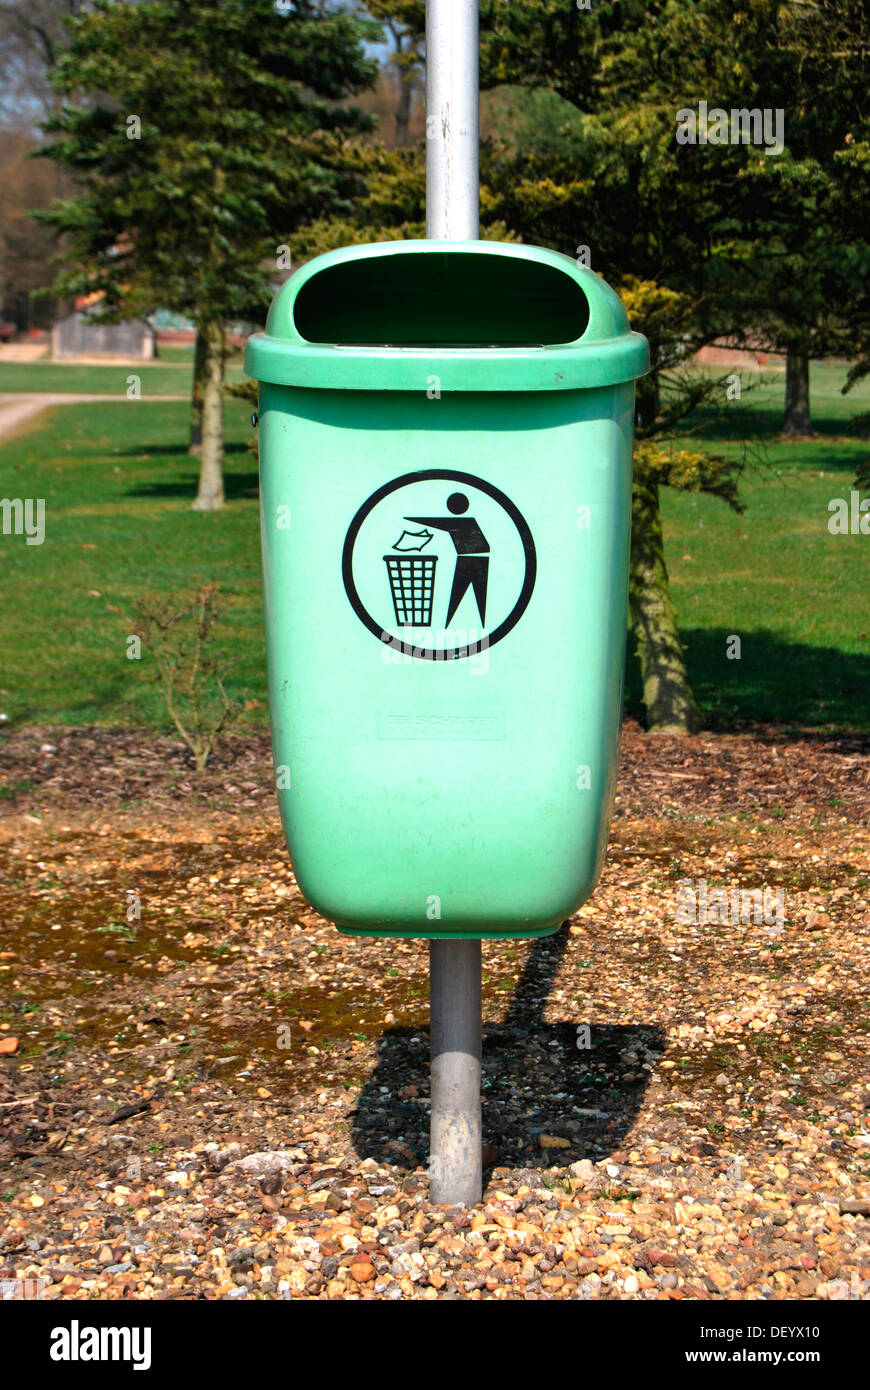 Green waste bin in a park Stock Photo